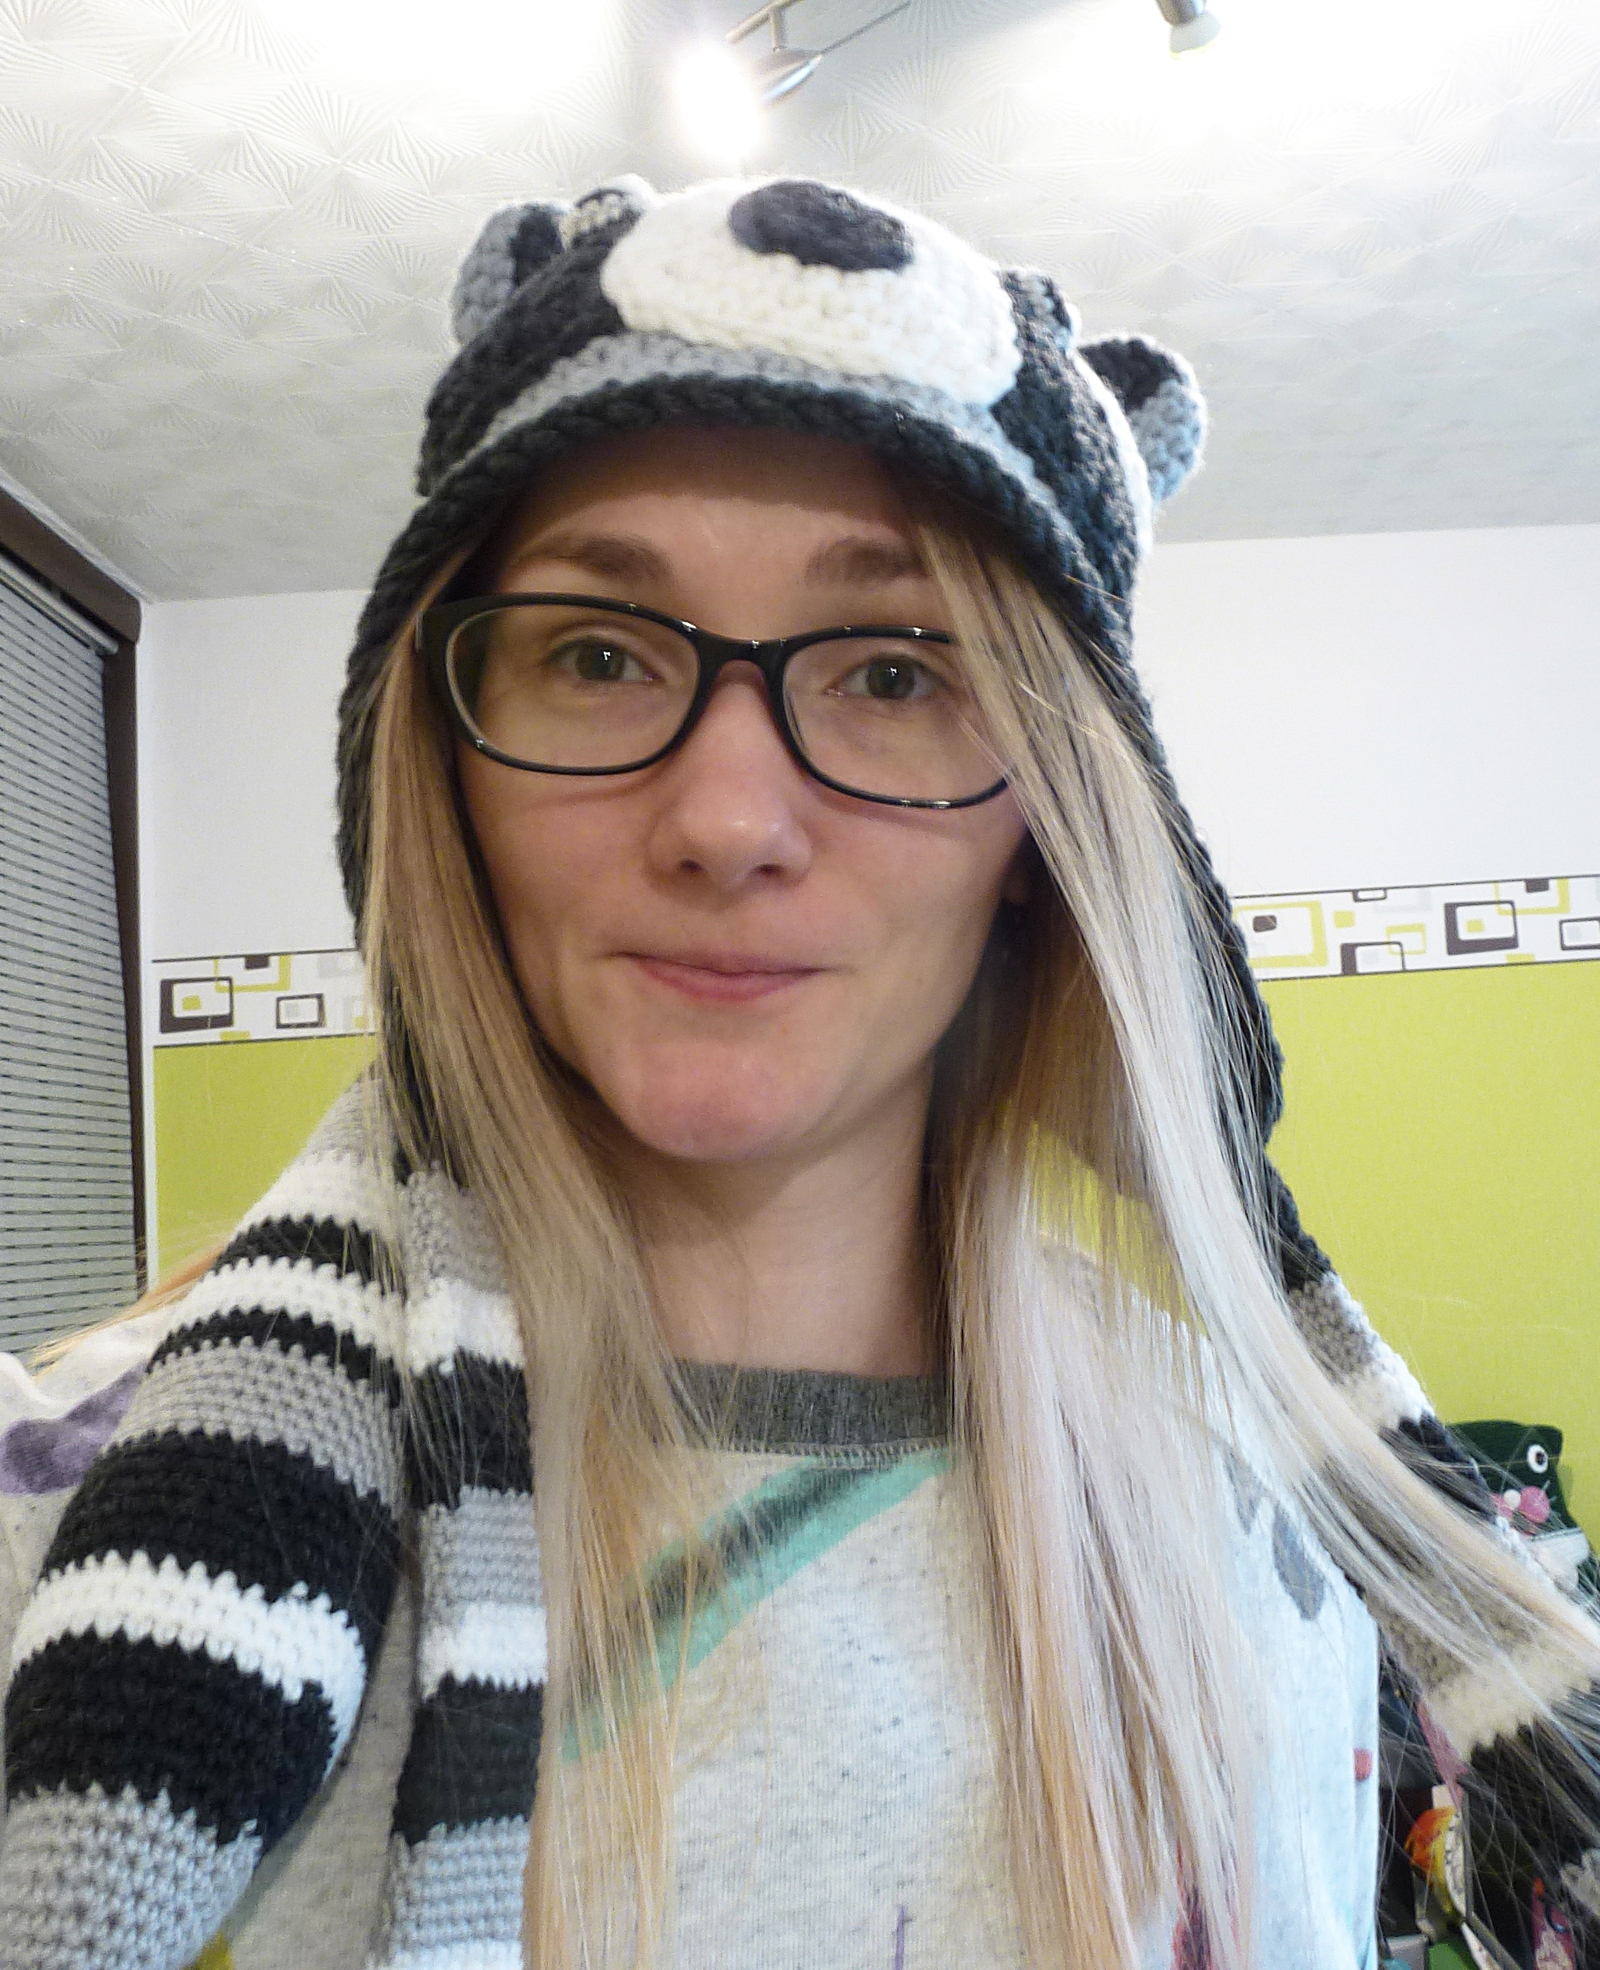 Raccoon hat - My, Knitting, Raccoon, Needlework without process, Crochet, Longpost, Cap, Needlework